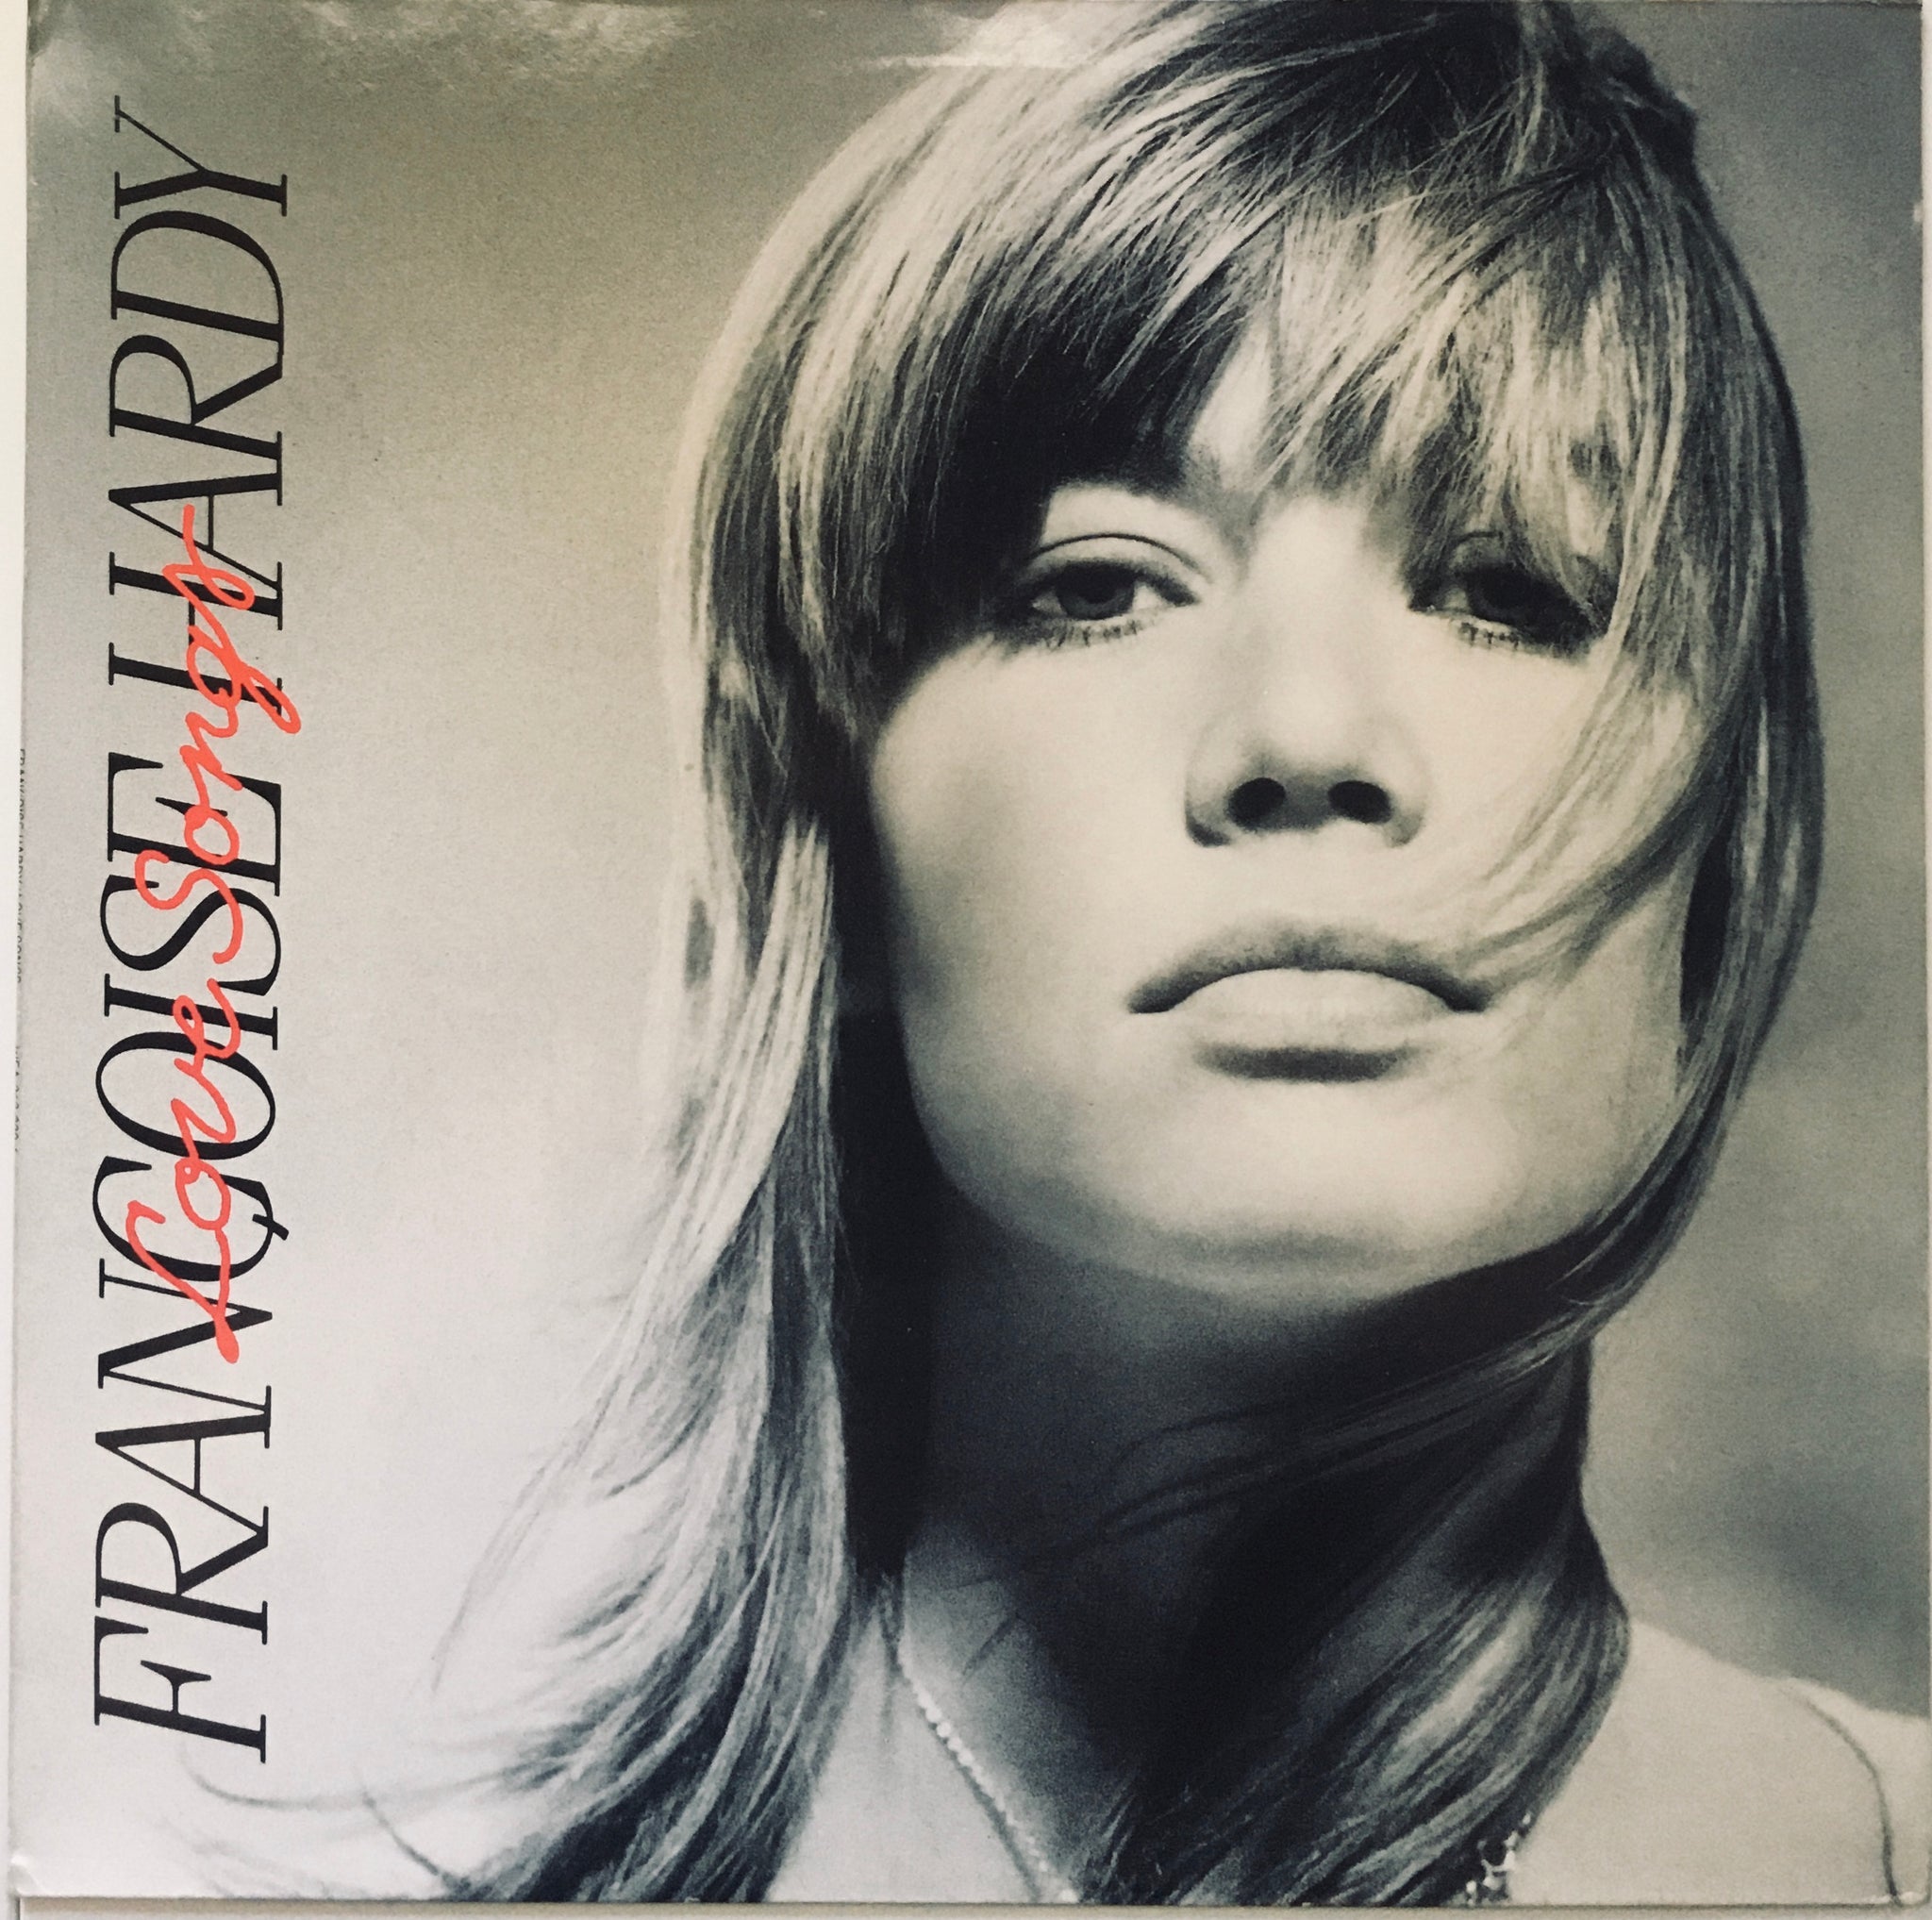 Françoise Hardy "Love Songs" LP (1987)